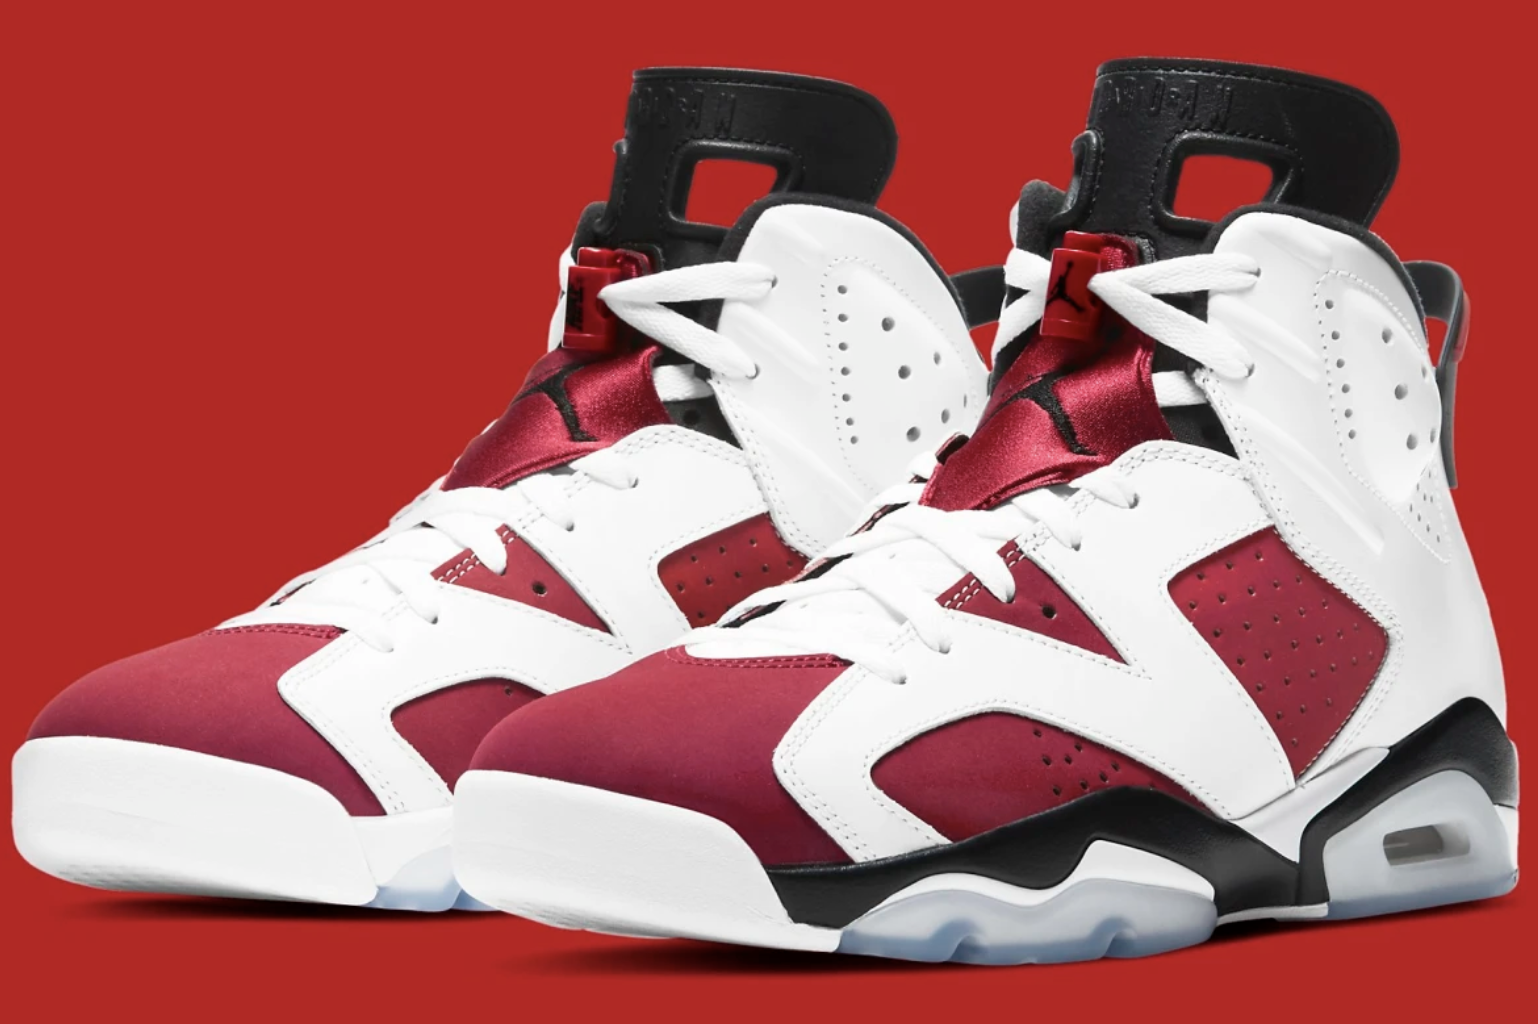 Nike Air Jordan 6 'Carmine' Release Date, Pics and Retail Price